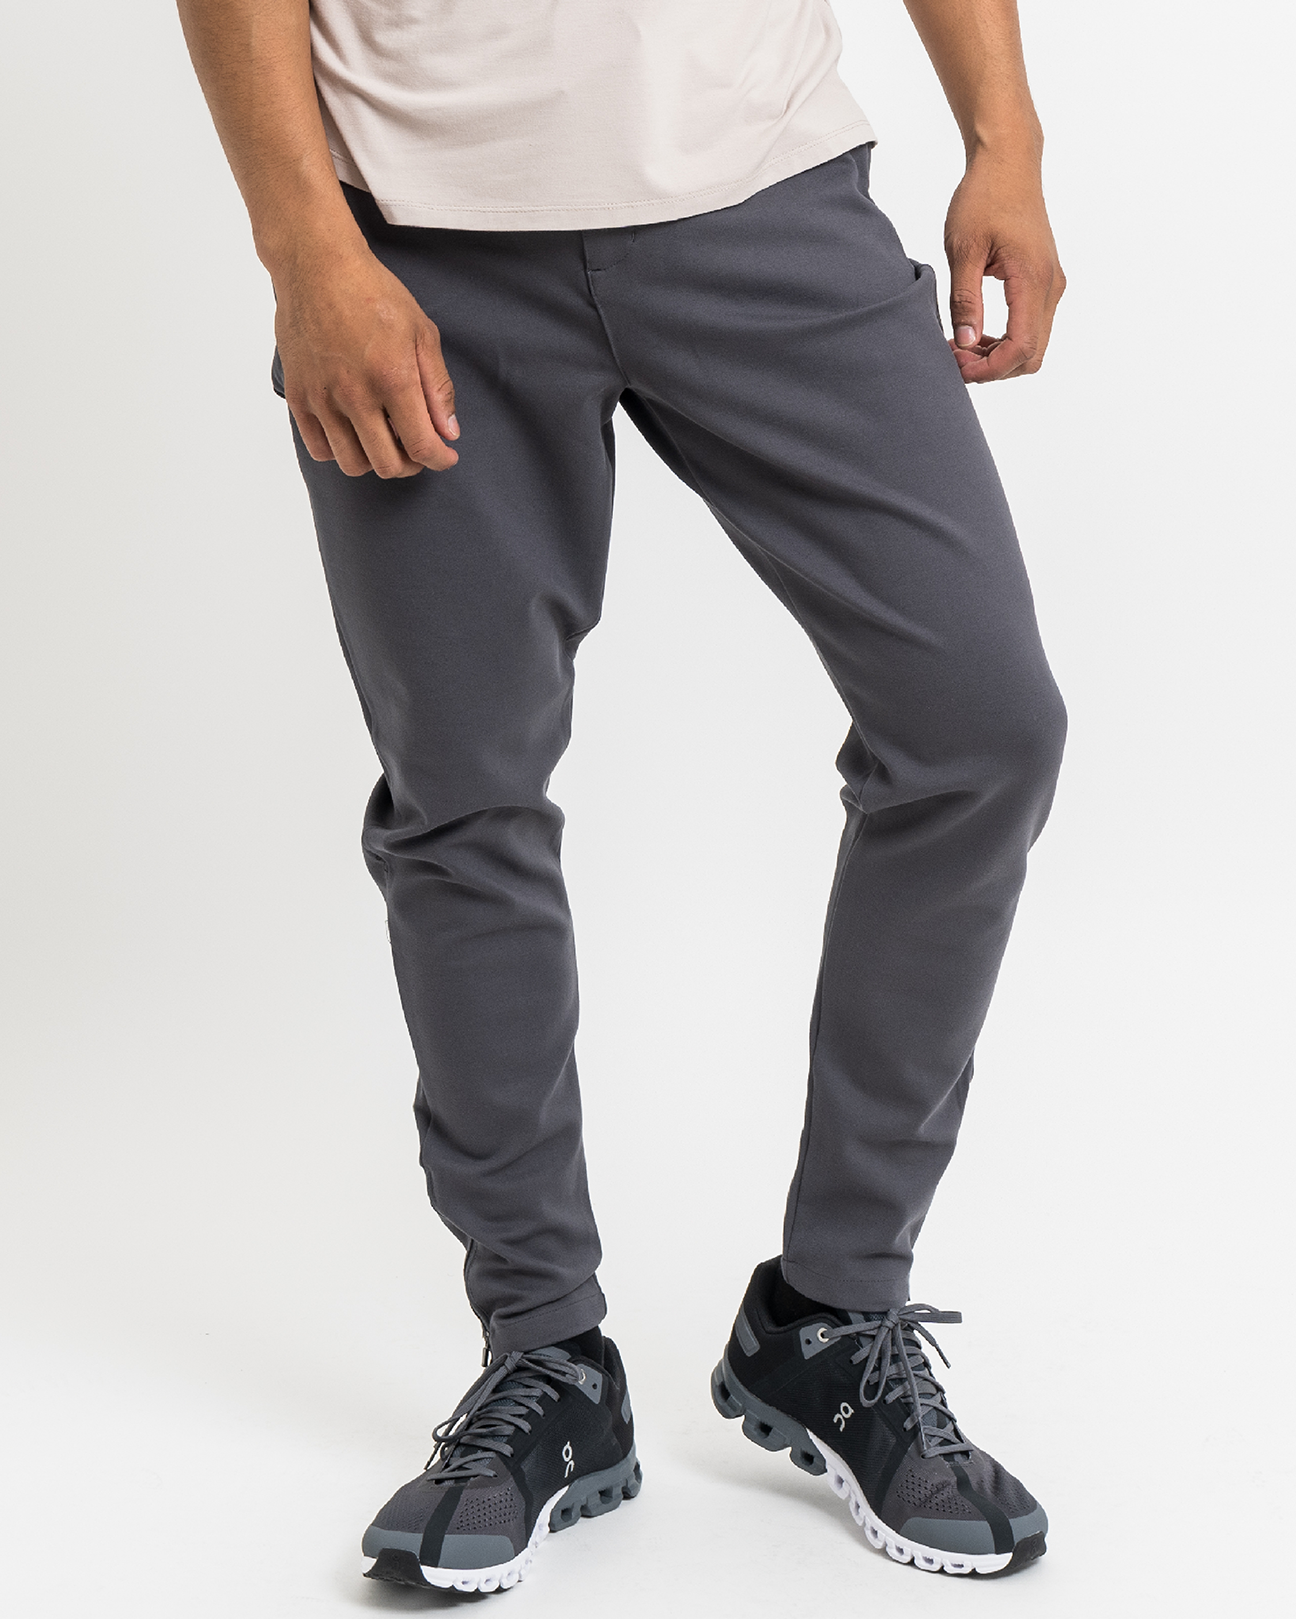 Commuter Trousers - Cadet Grey